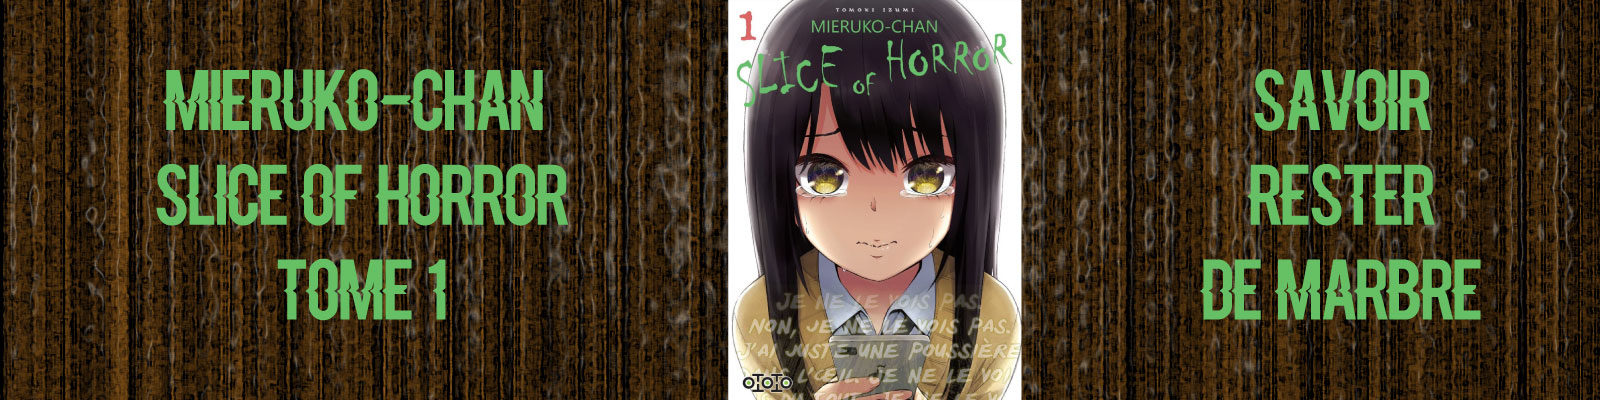 Mieruko-chan---Slice-Of-Horror-Vol.-1